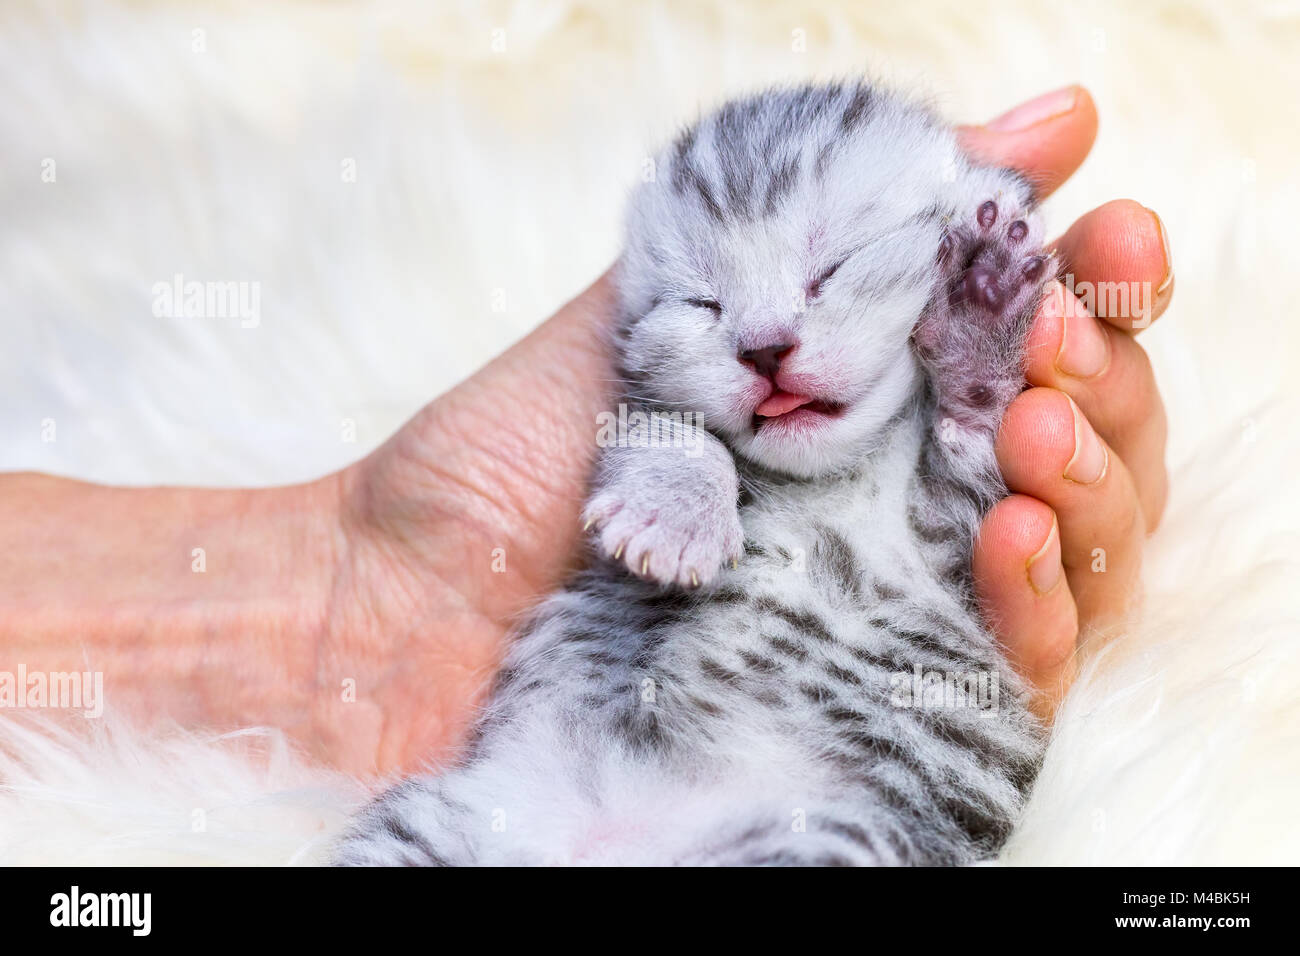 Sleeping newborn  silver tabby cat in hand Stock Photo